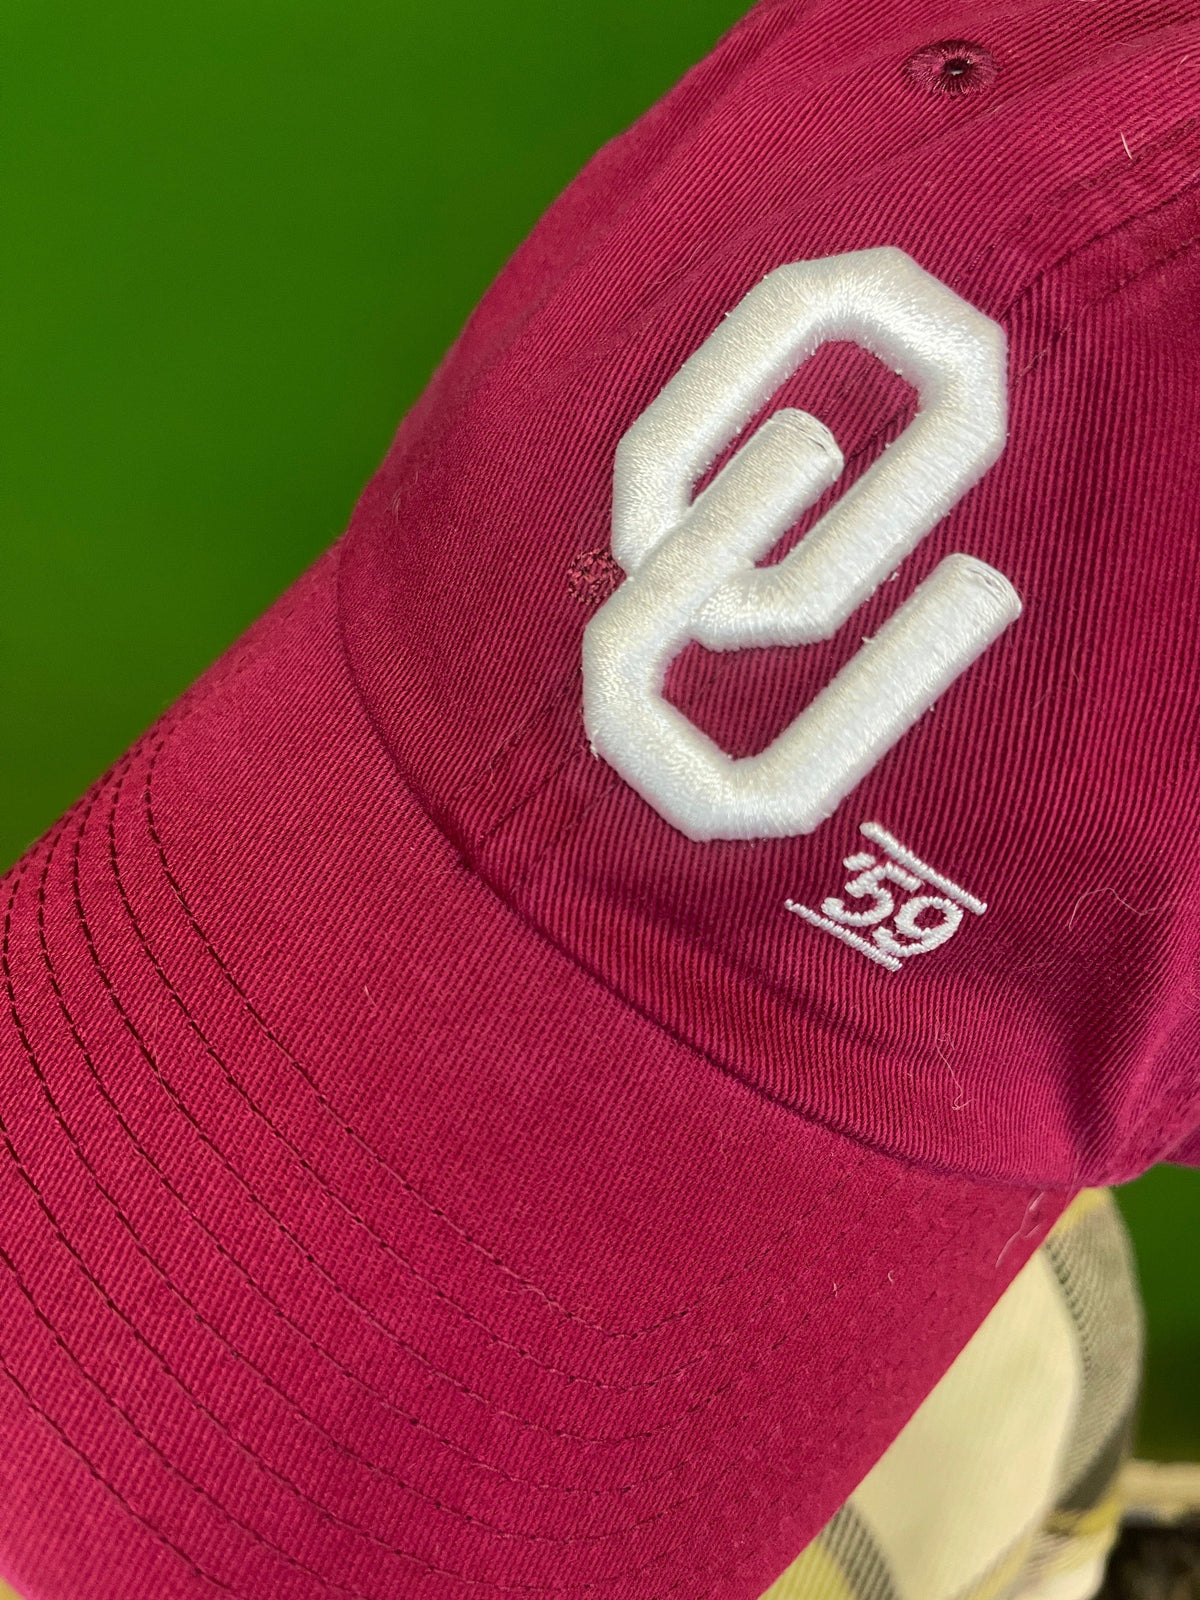 NCAA Oklahoma Sooners 100% Cotton Strapback Hat/Cap OSFM